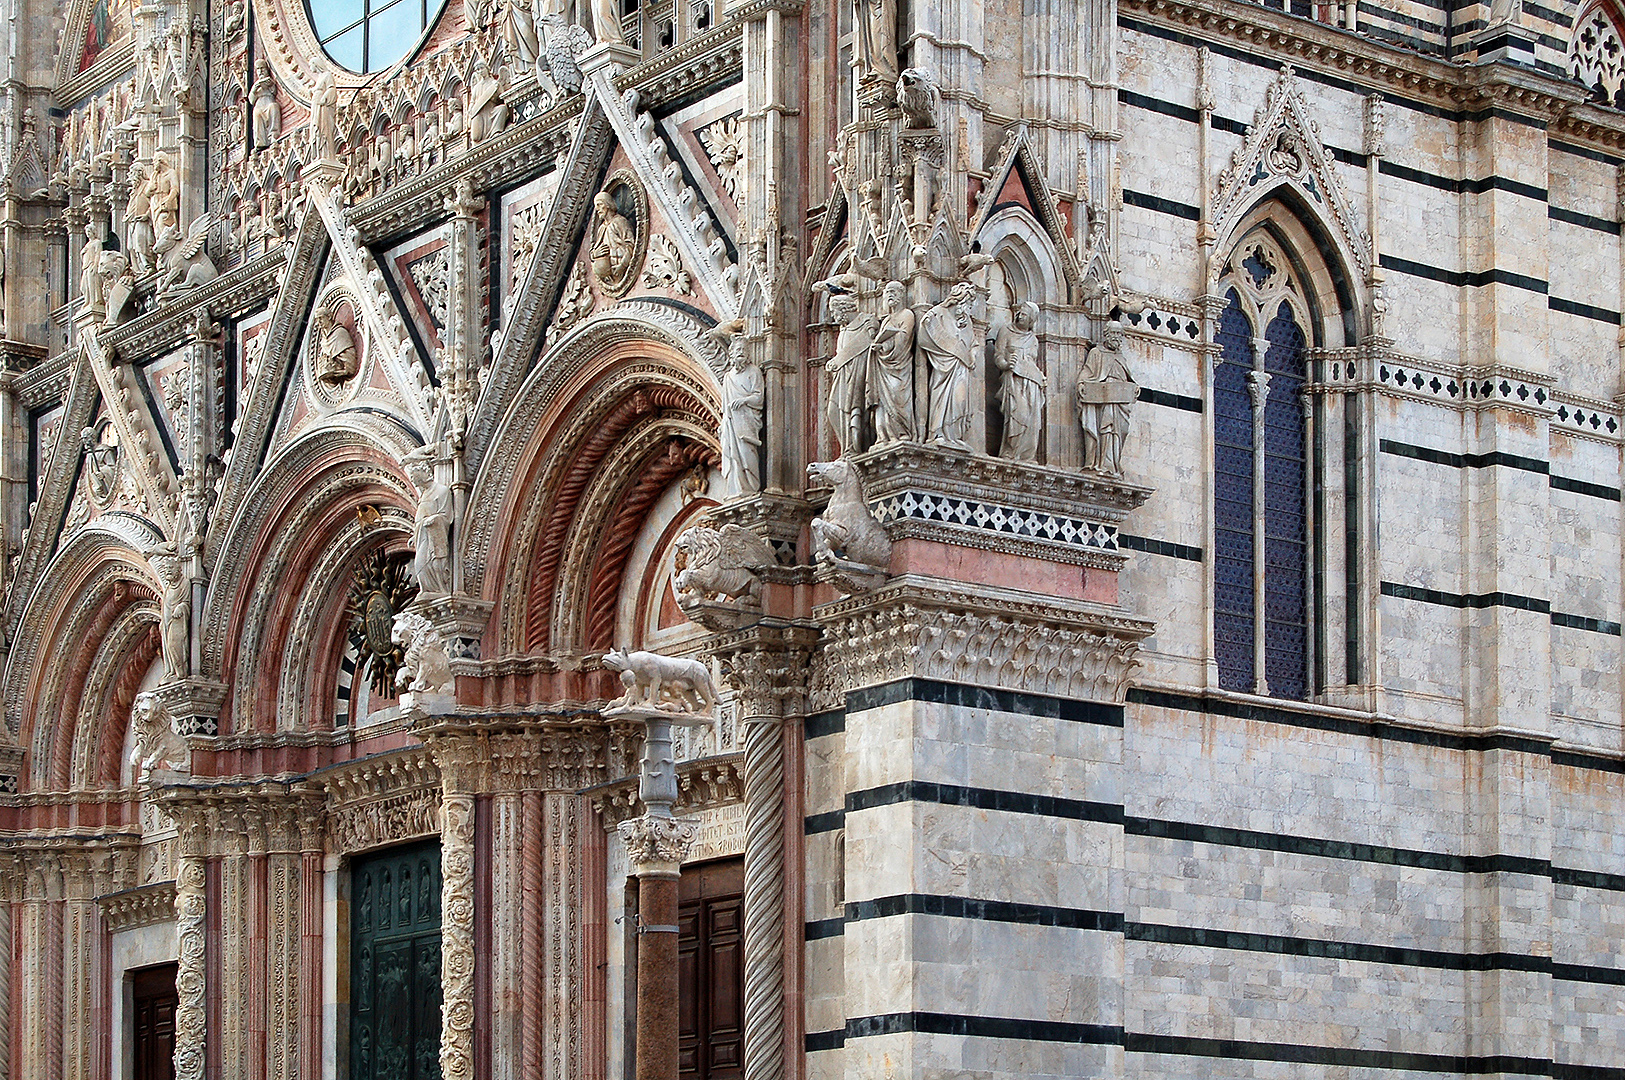 Kathedraal van Siena (Toscane, Italië), Siena Cathedral, Tuscany, Italy